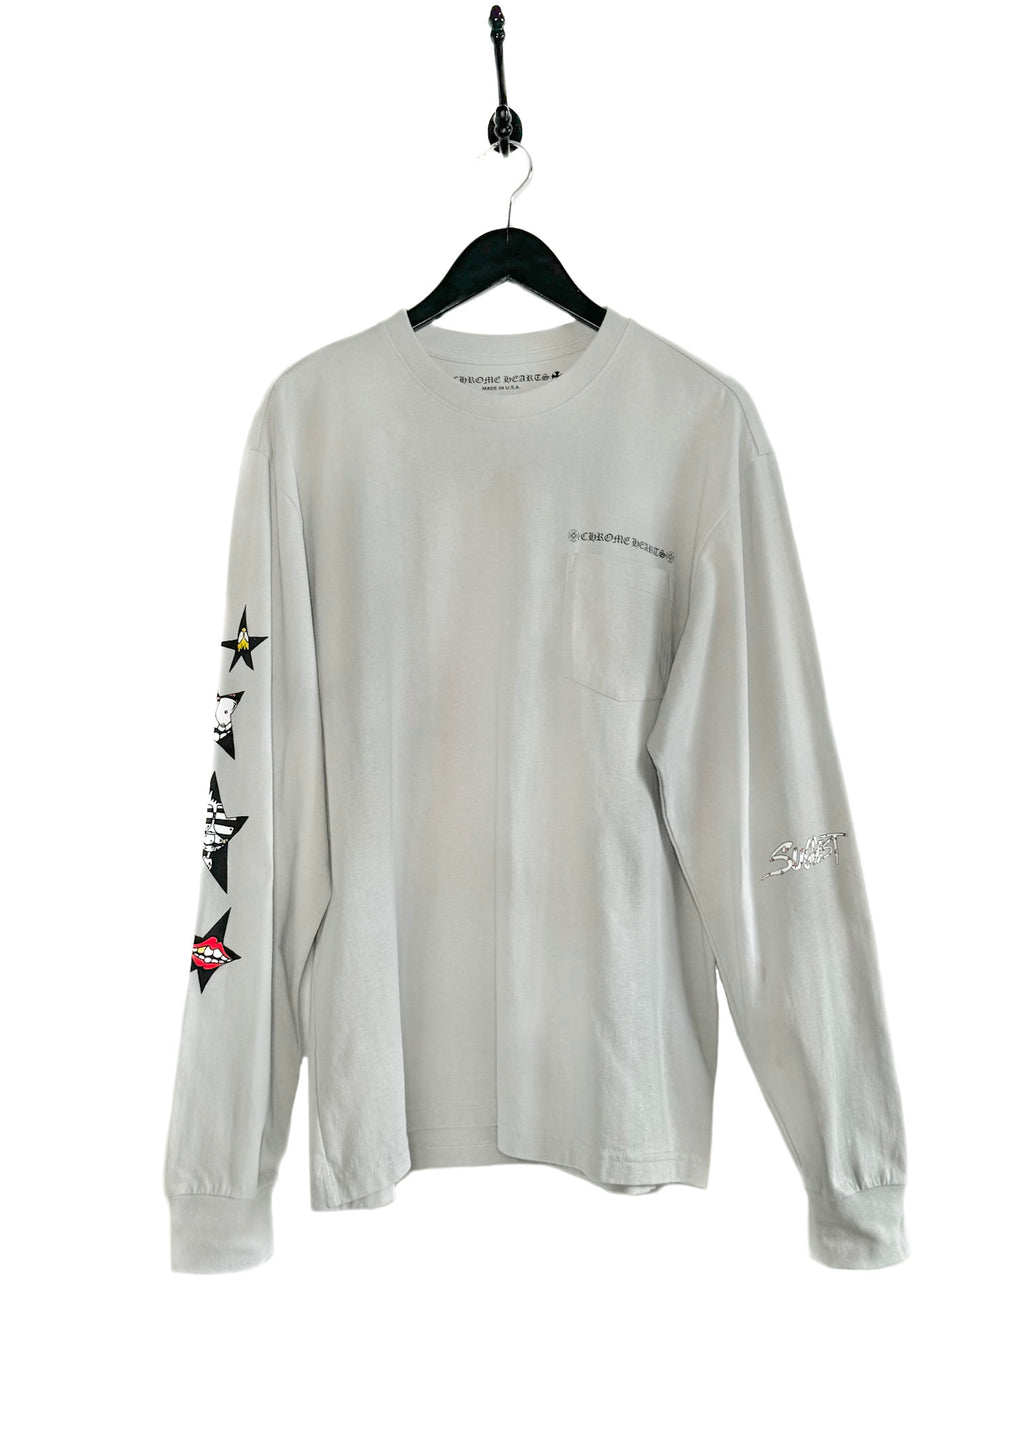 Chrome Hearts Matty Boy Suggest Star Print Grey Long Sleeves T-shirt